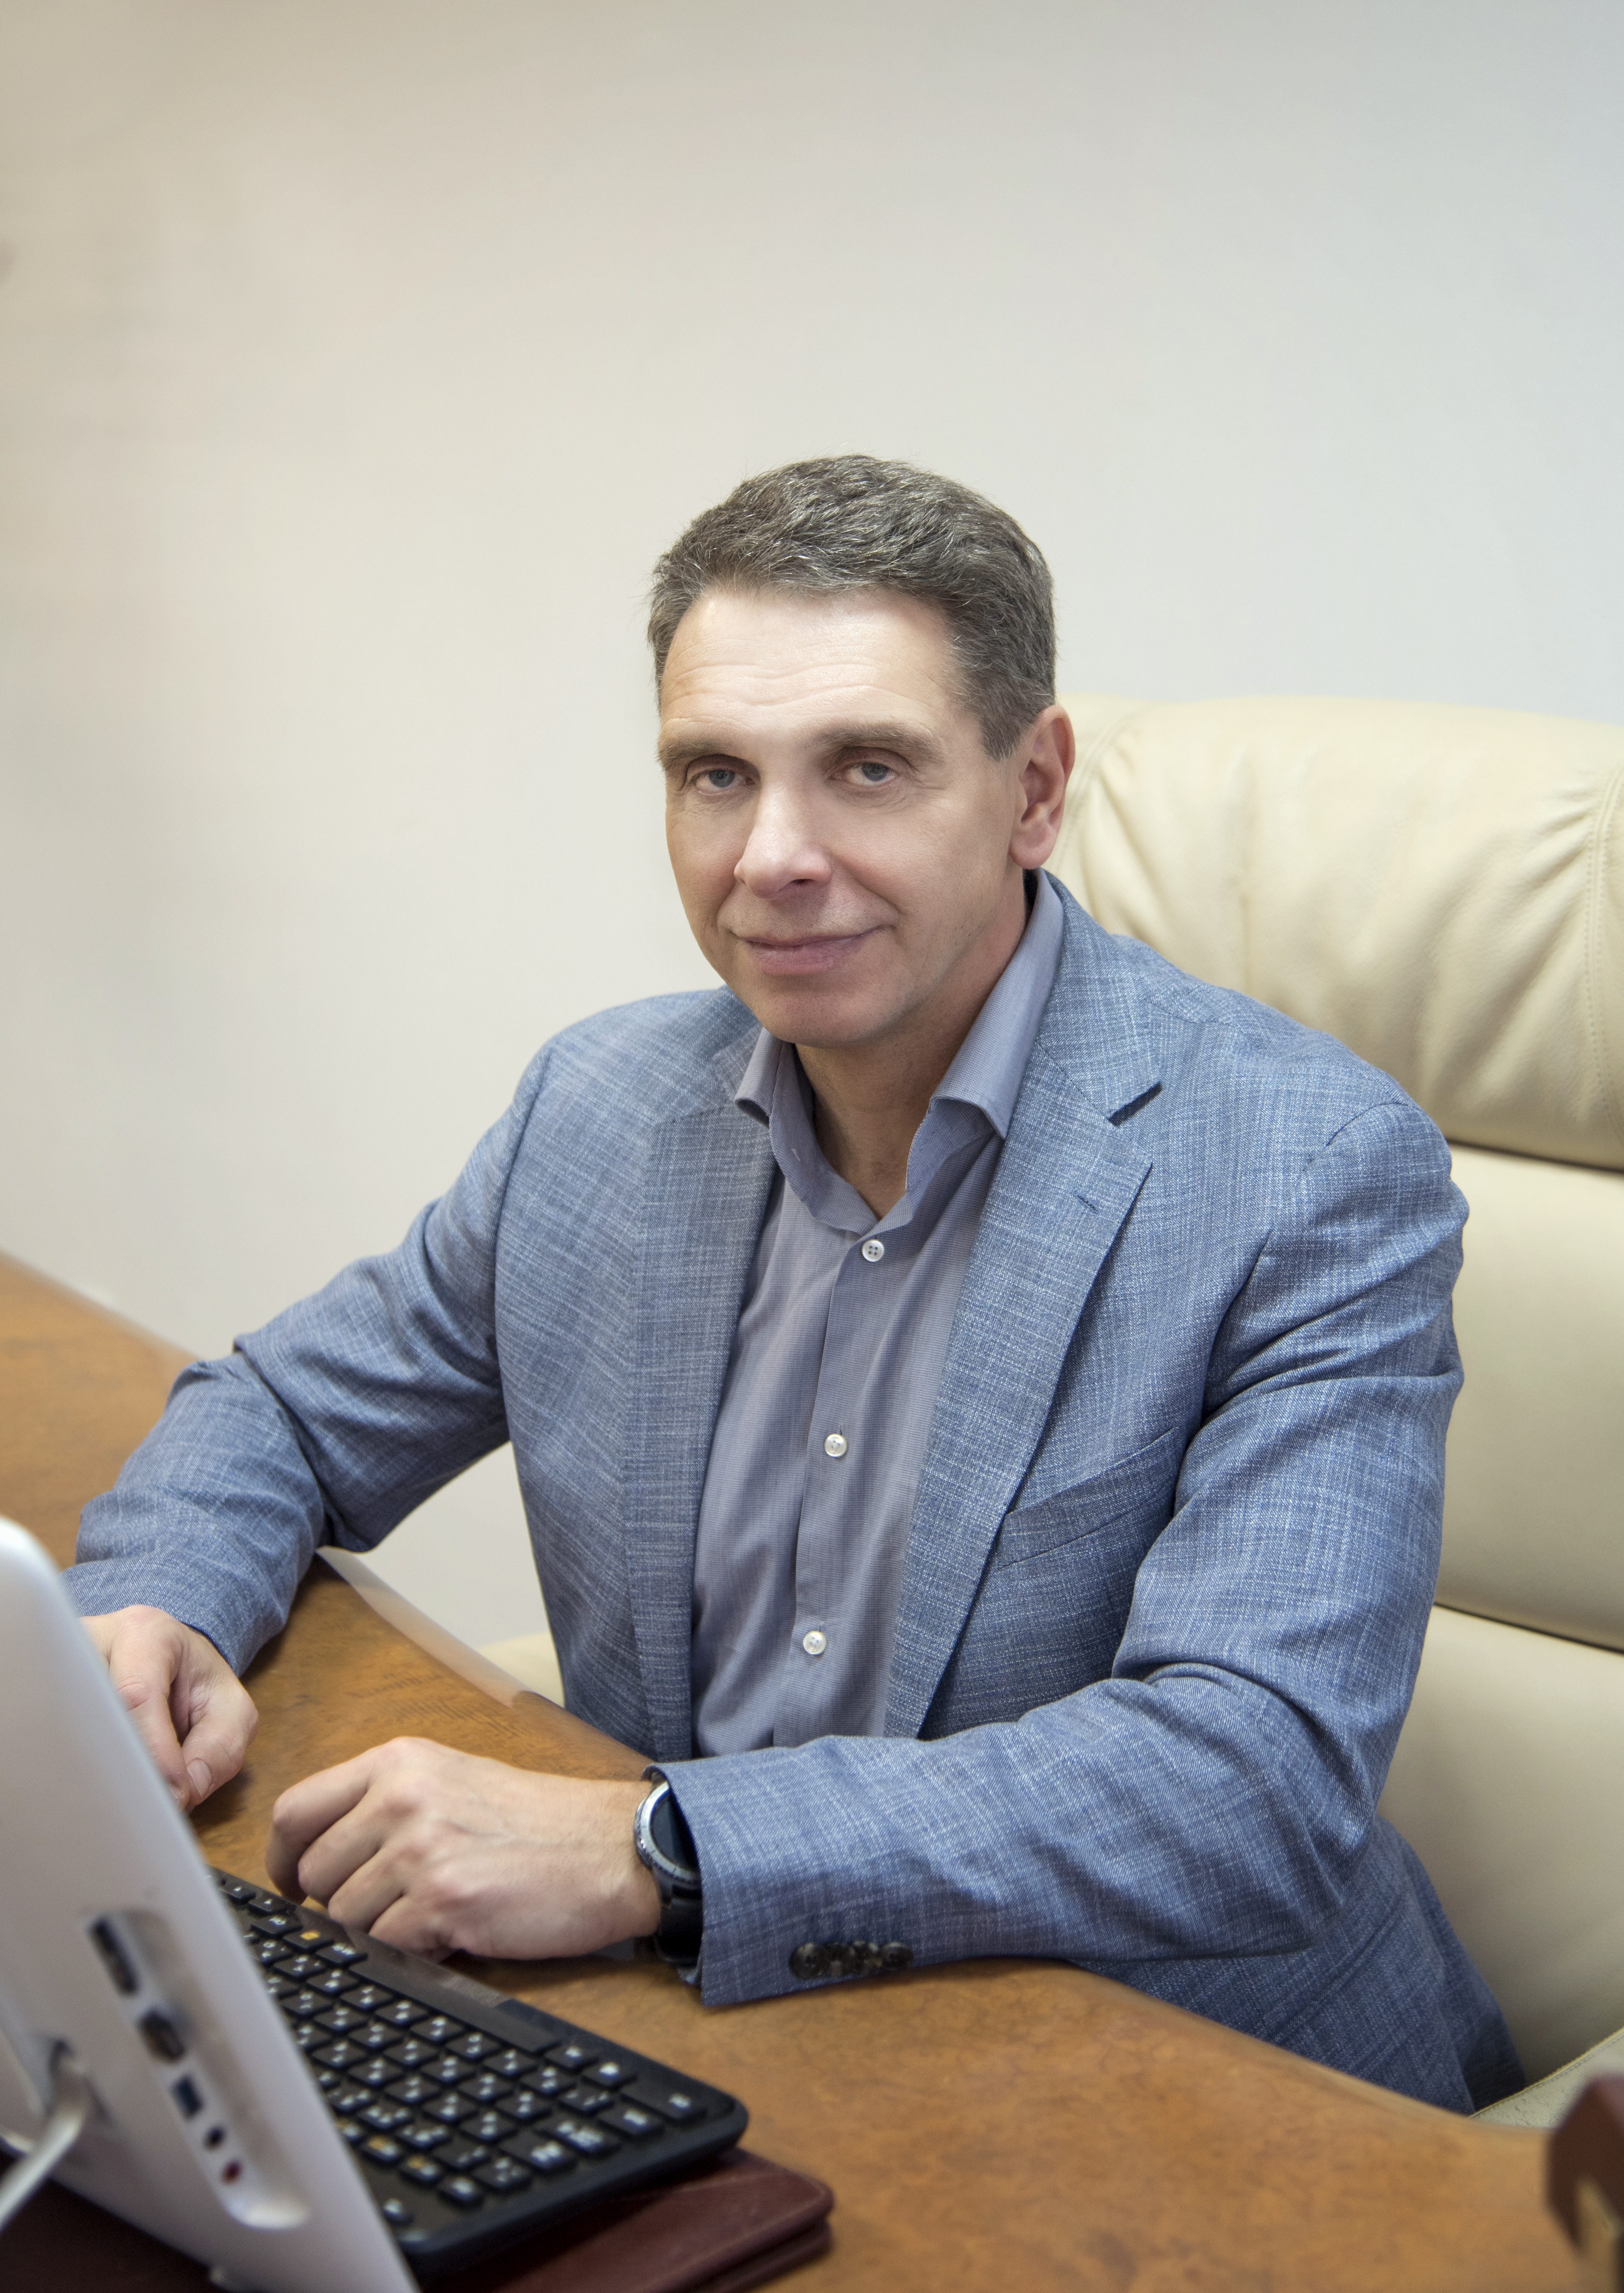 Валерий Семенович Маковецкий – бизнесмен, участник списка Forbes Украина